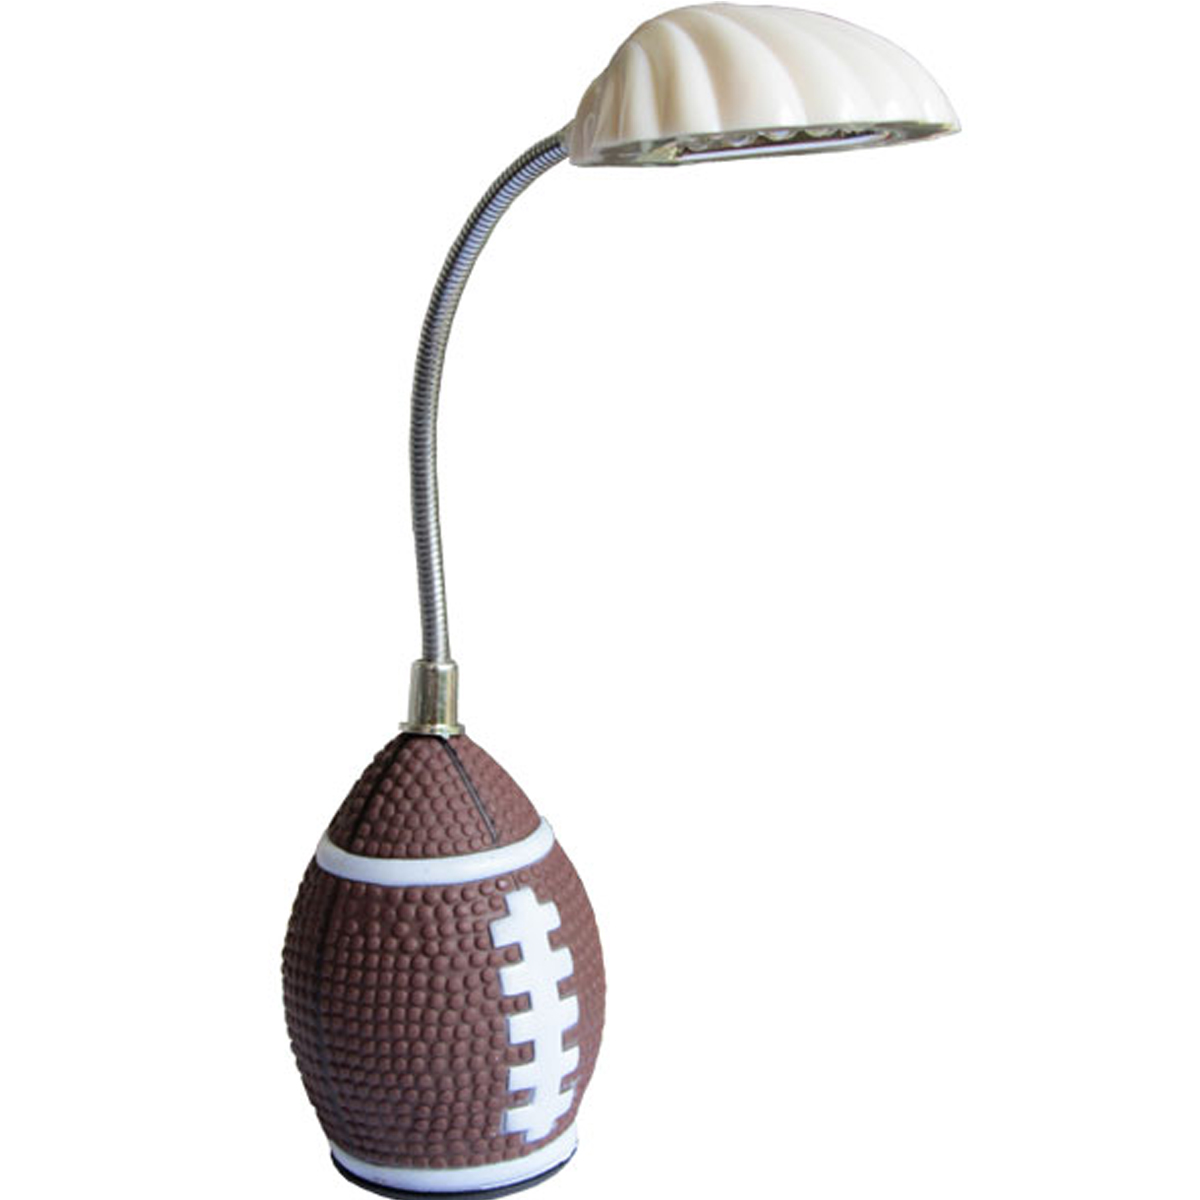 Amercian football Shaped USB Lamp